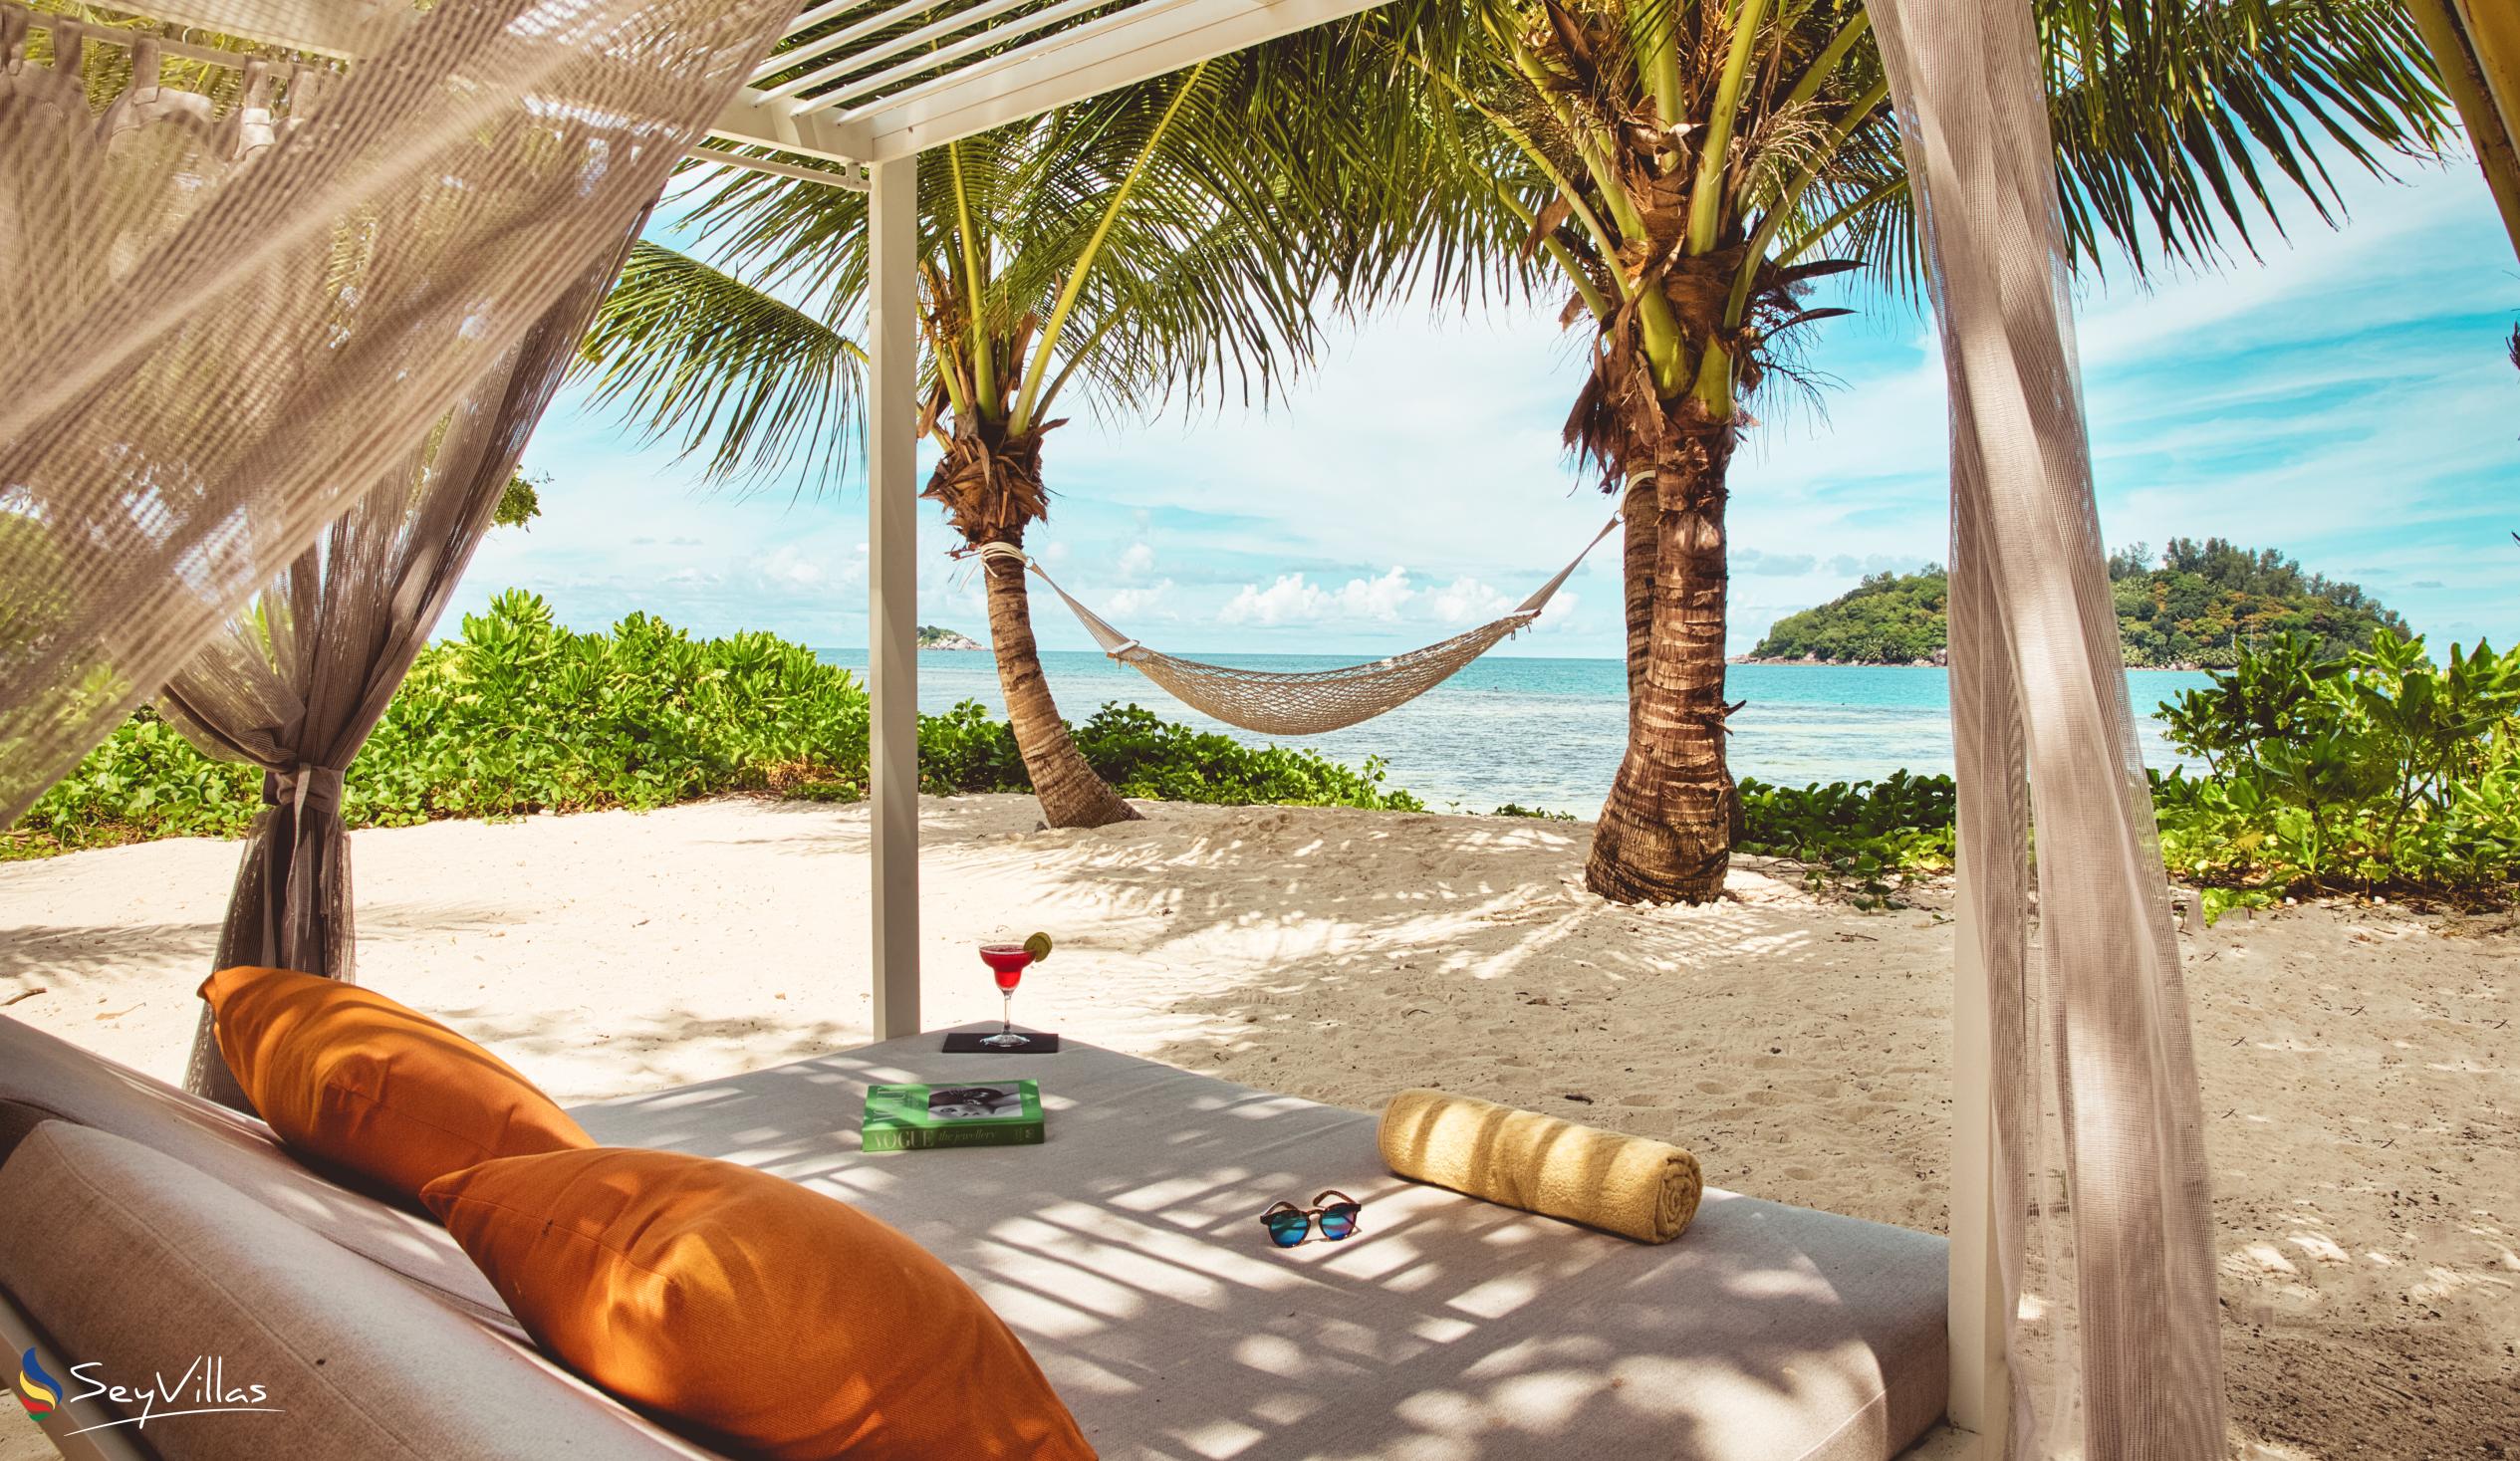 Foto 38: Club Med Seychelles - Lage - Saint Anne (Seychellen)